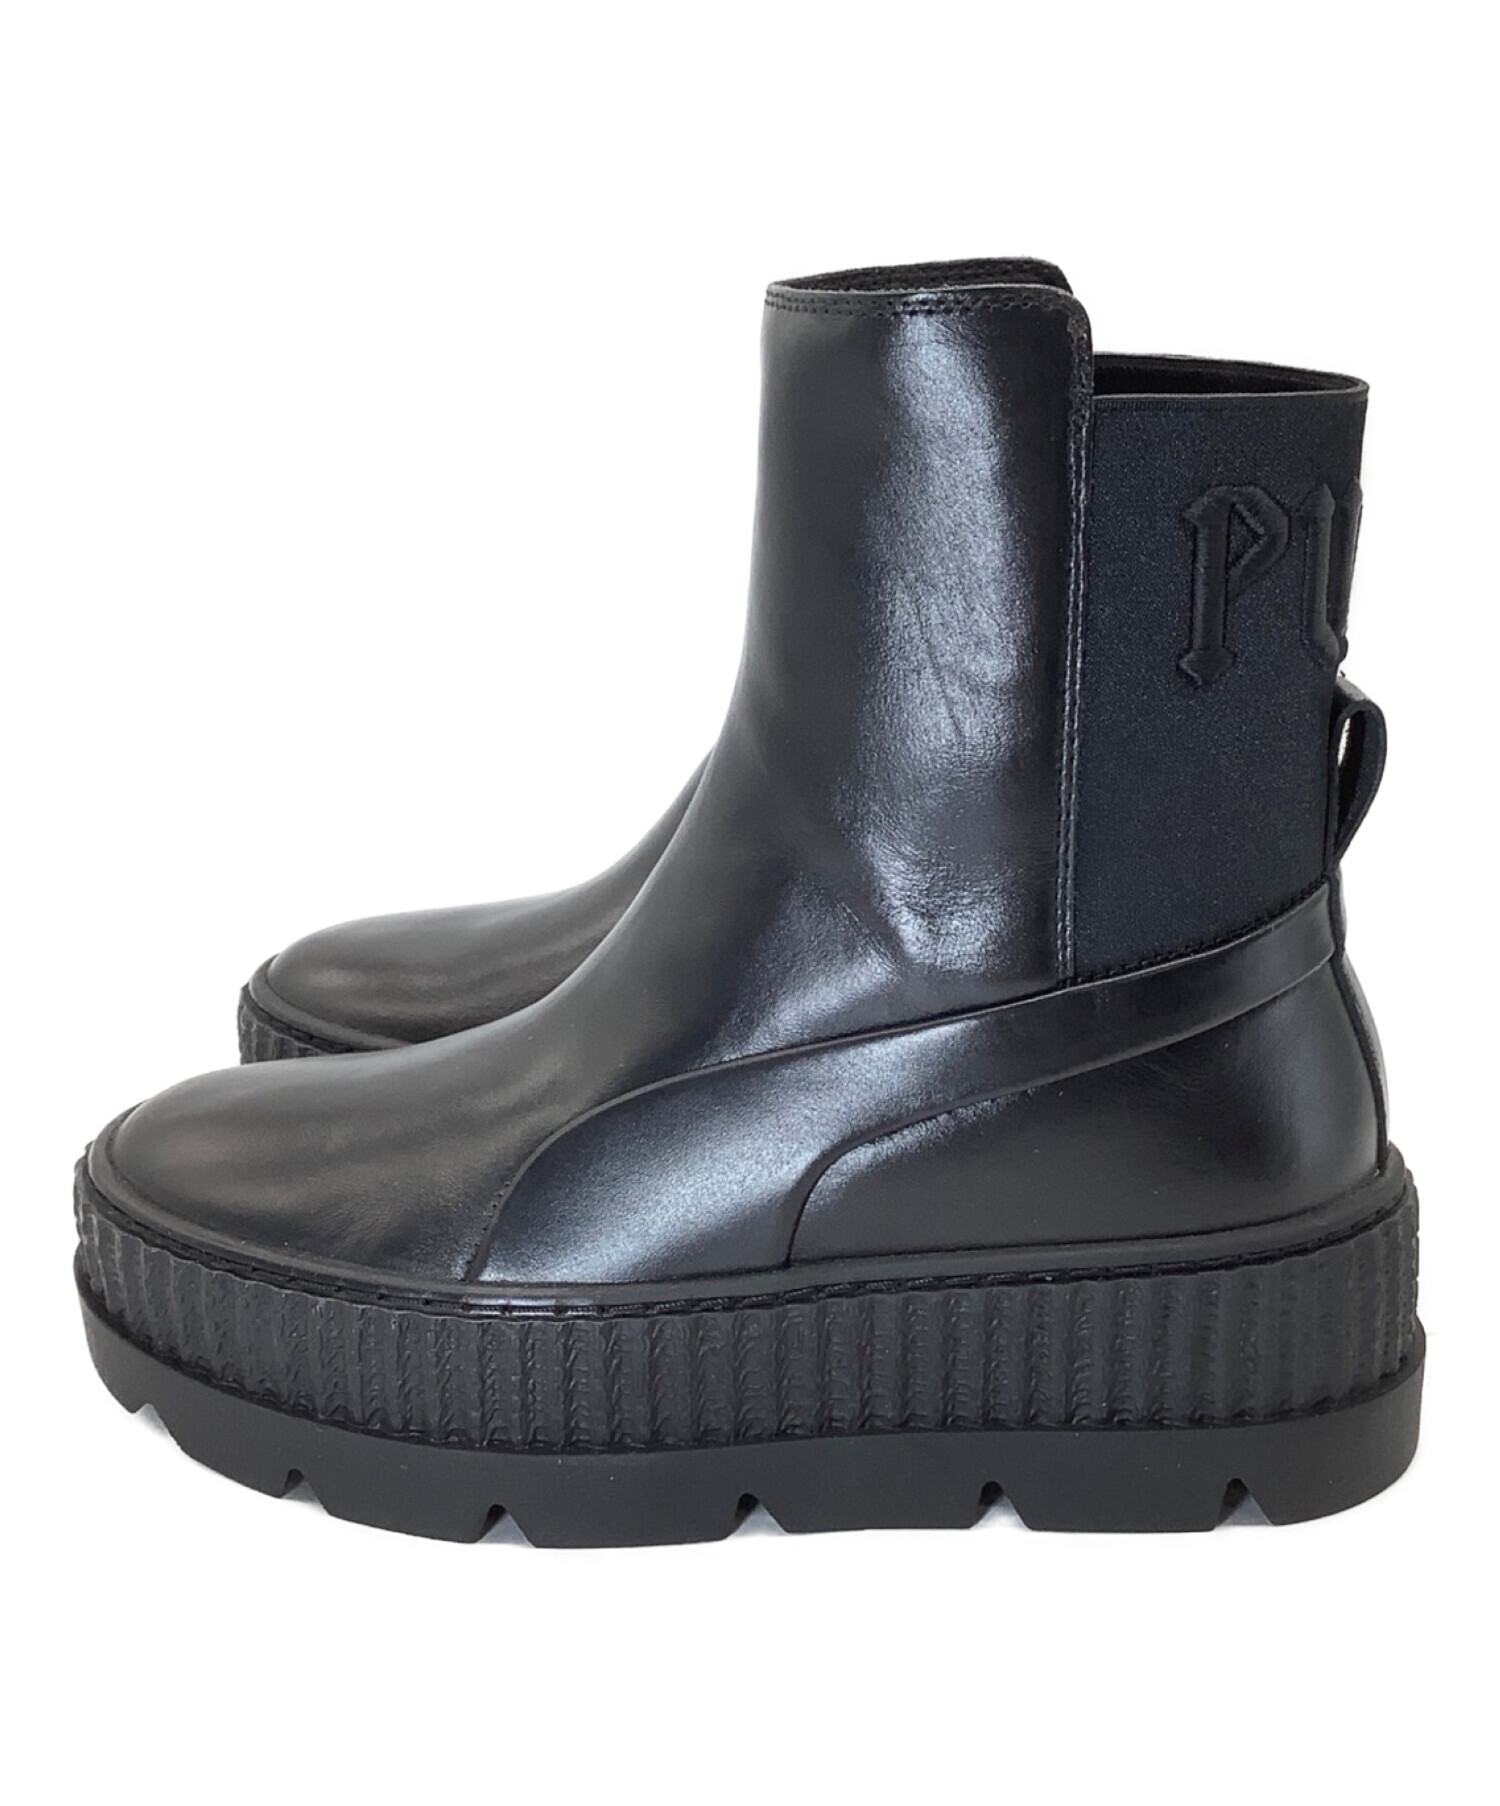 Fenty PUMA by Rihanna (フェンティ プーマ バイ リアーナ) Chelsea Sneaker Boot ブラック サイズ:22.5